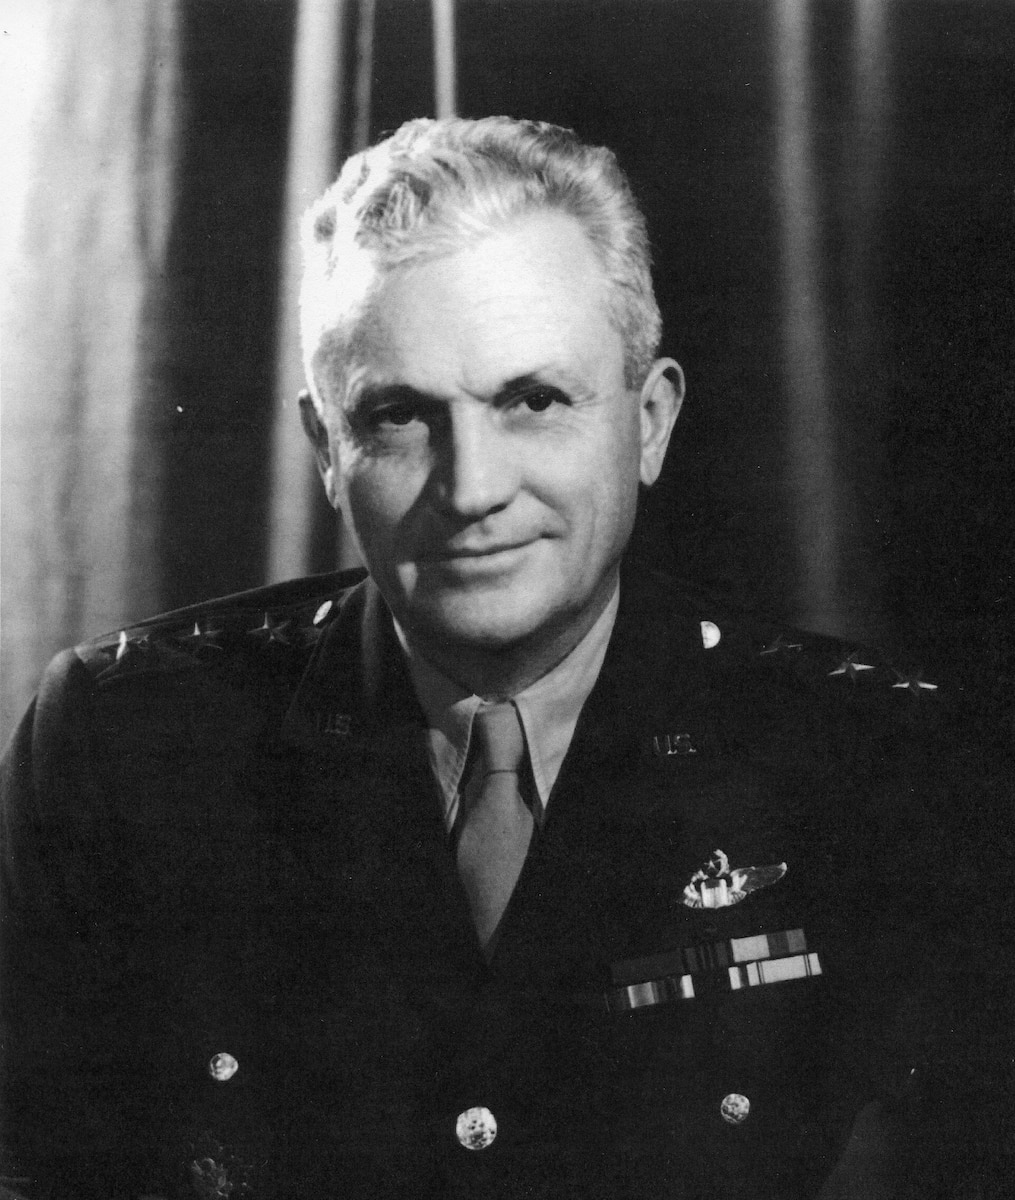 Lt. Gen. Frank M. Andrews